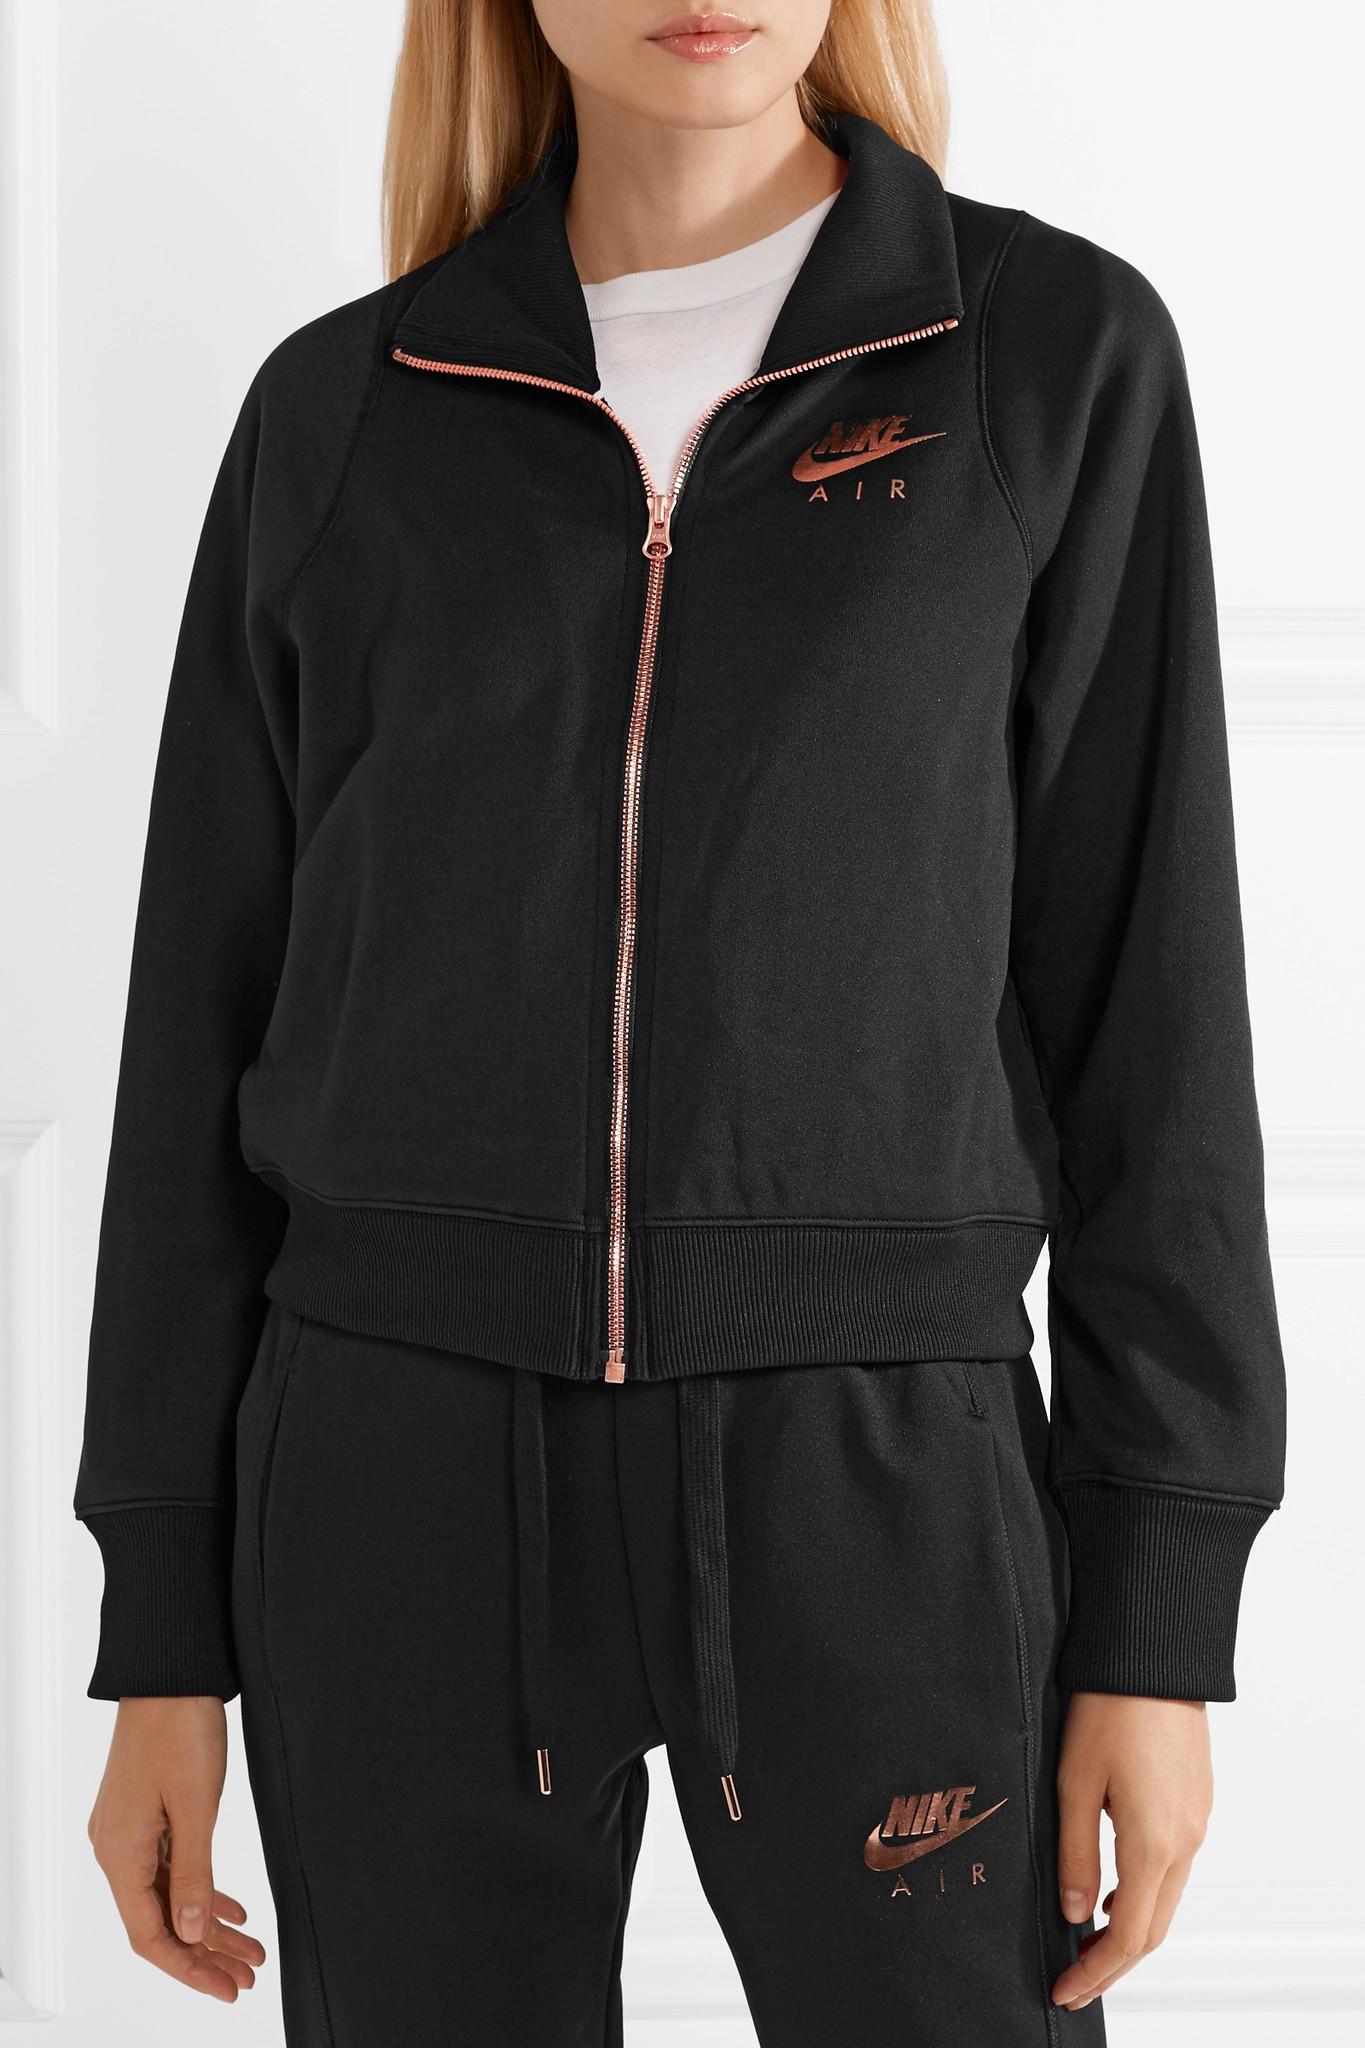 hueco Larry Belmont alabanza Nike Air N98 Jersey Track Jacket in Black | Lyst